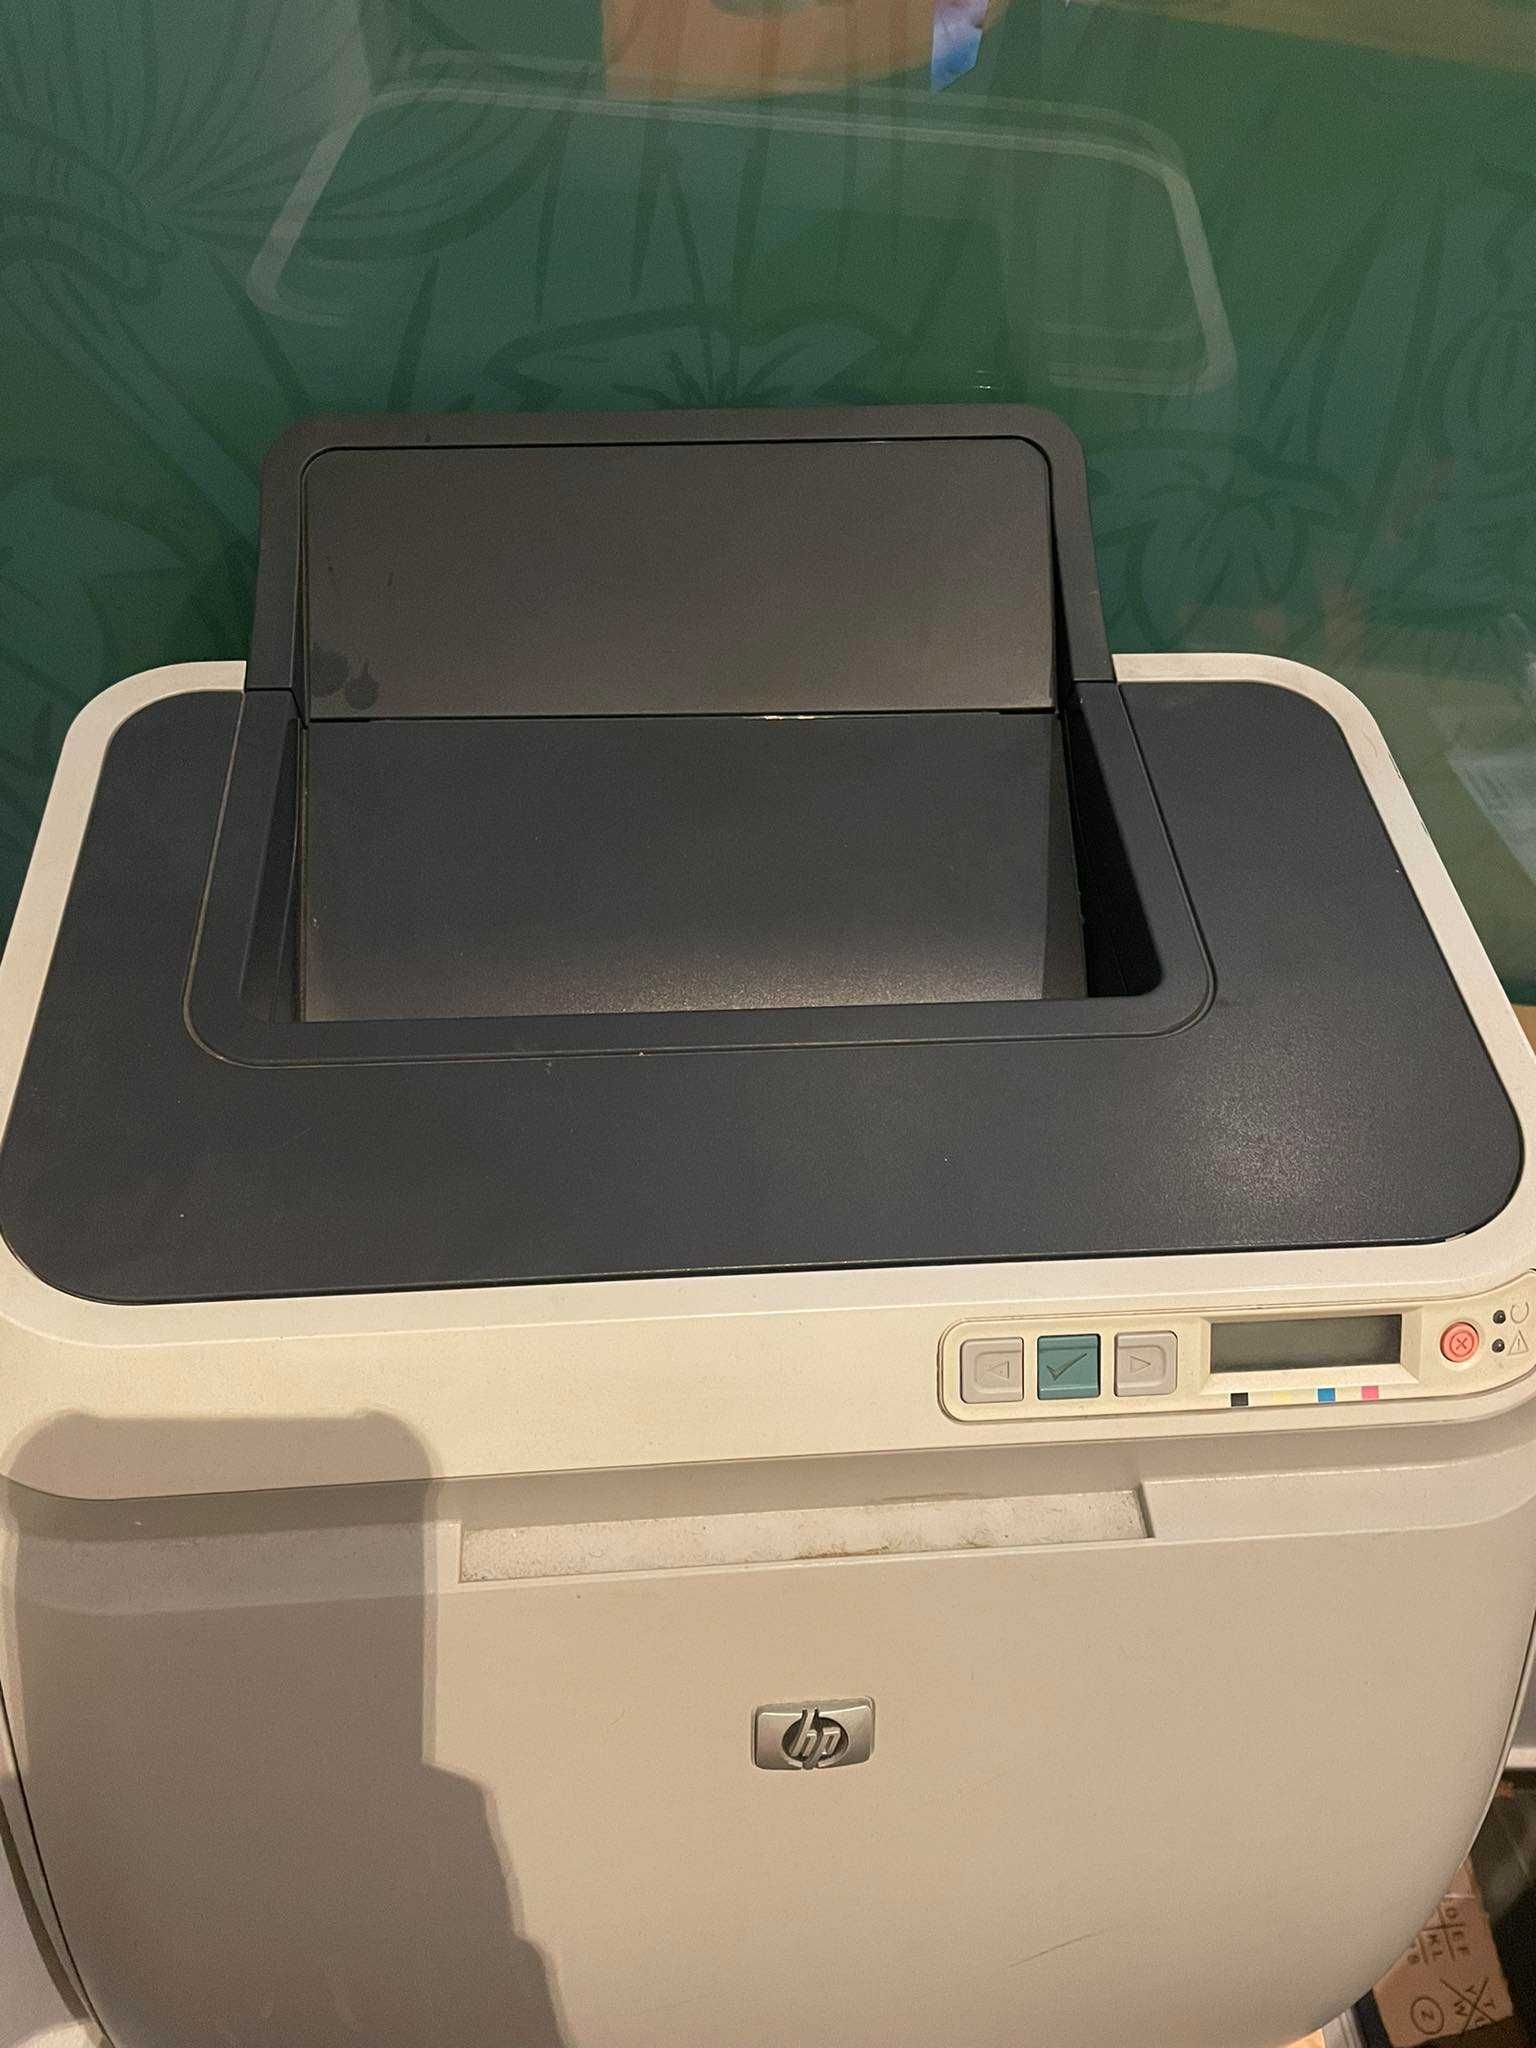 Drukarka HP Color LaserJet 2600n Printer